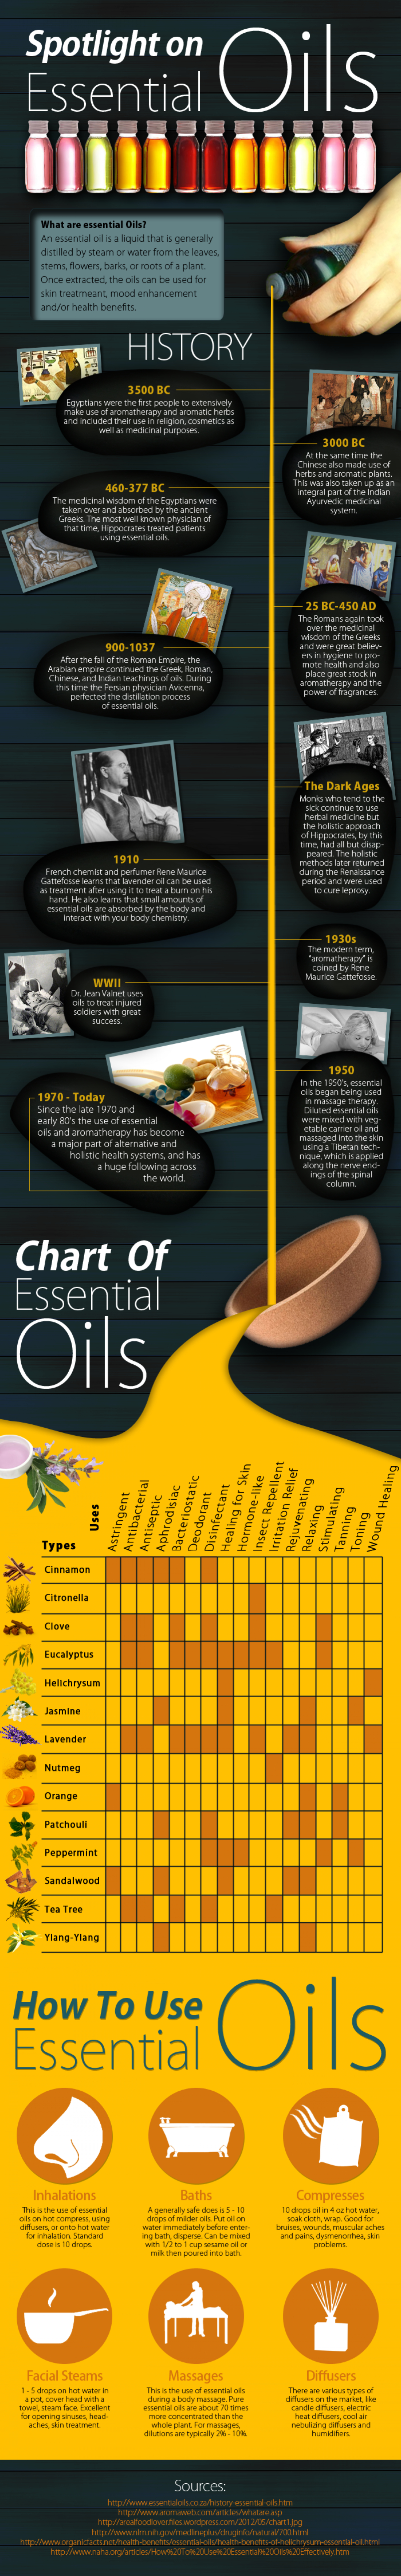 Spotlight on Essential Oils